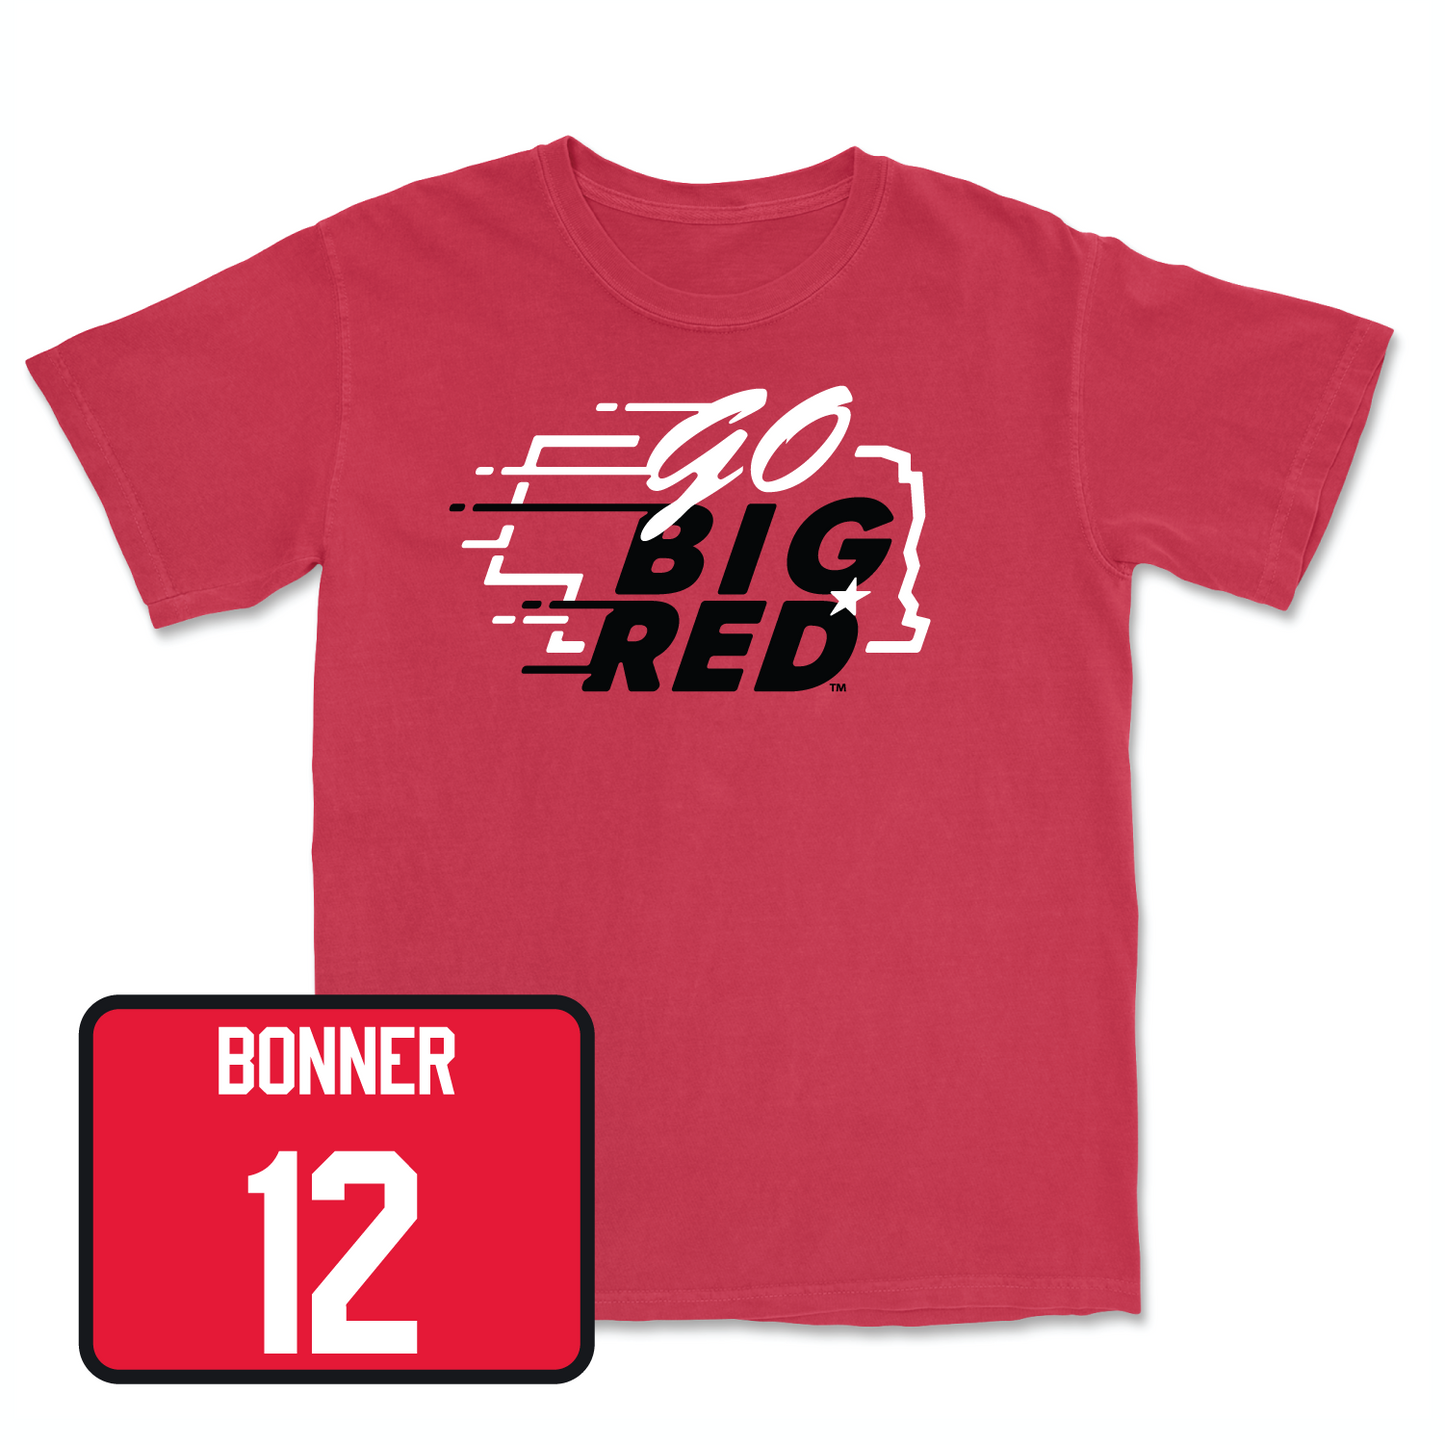 Red Football GBR Tee 2 3X-Large / Janiran Bonner | #12